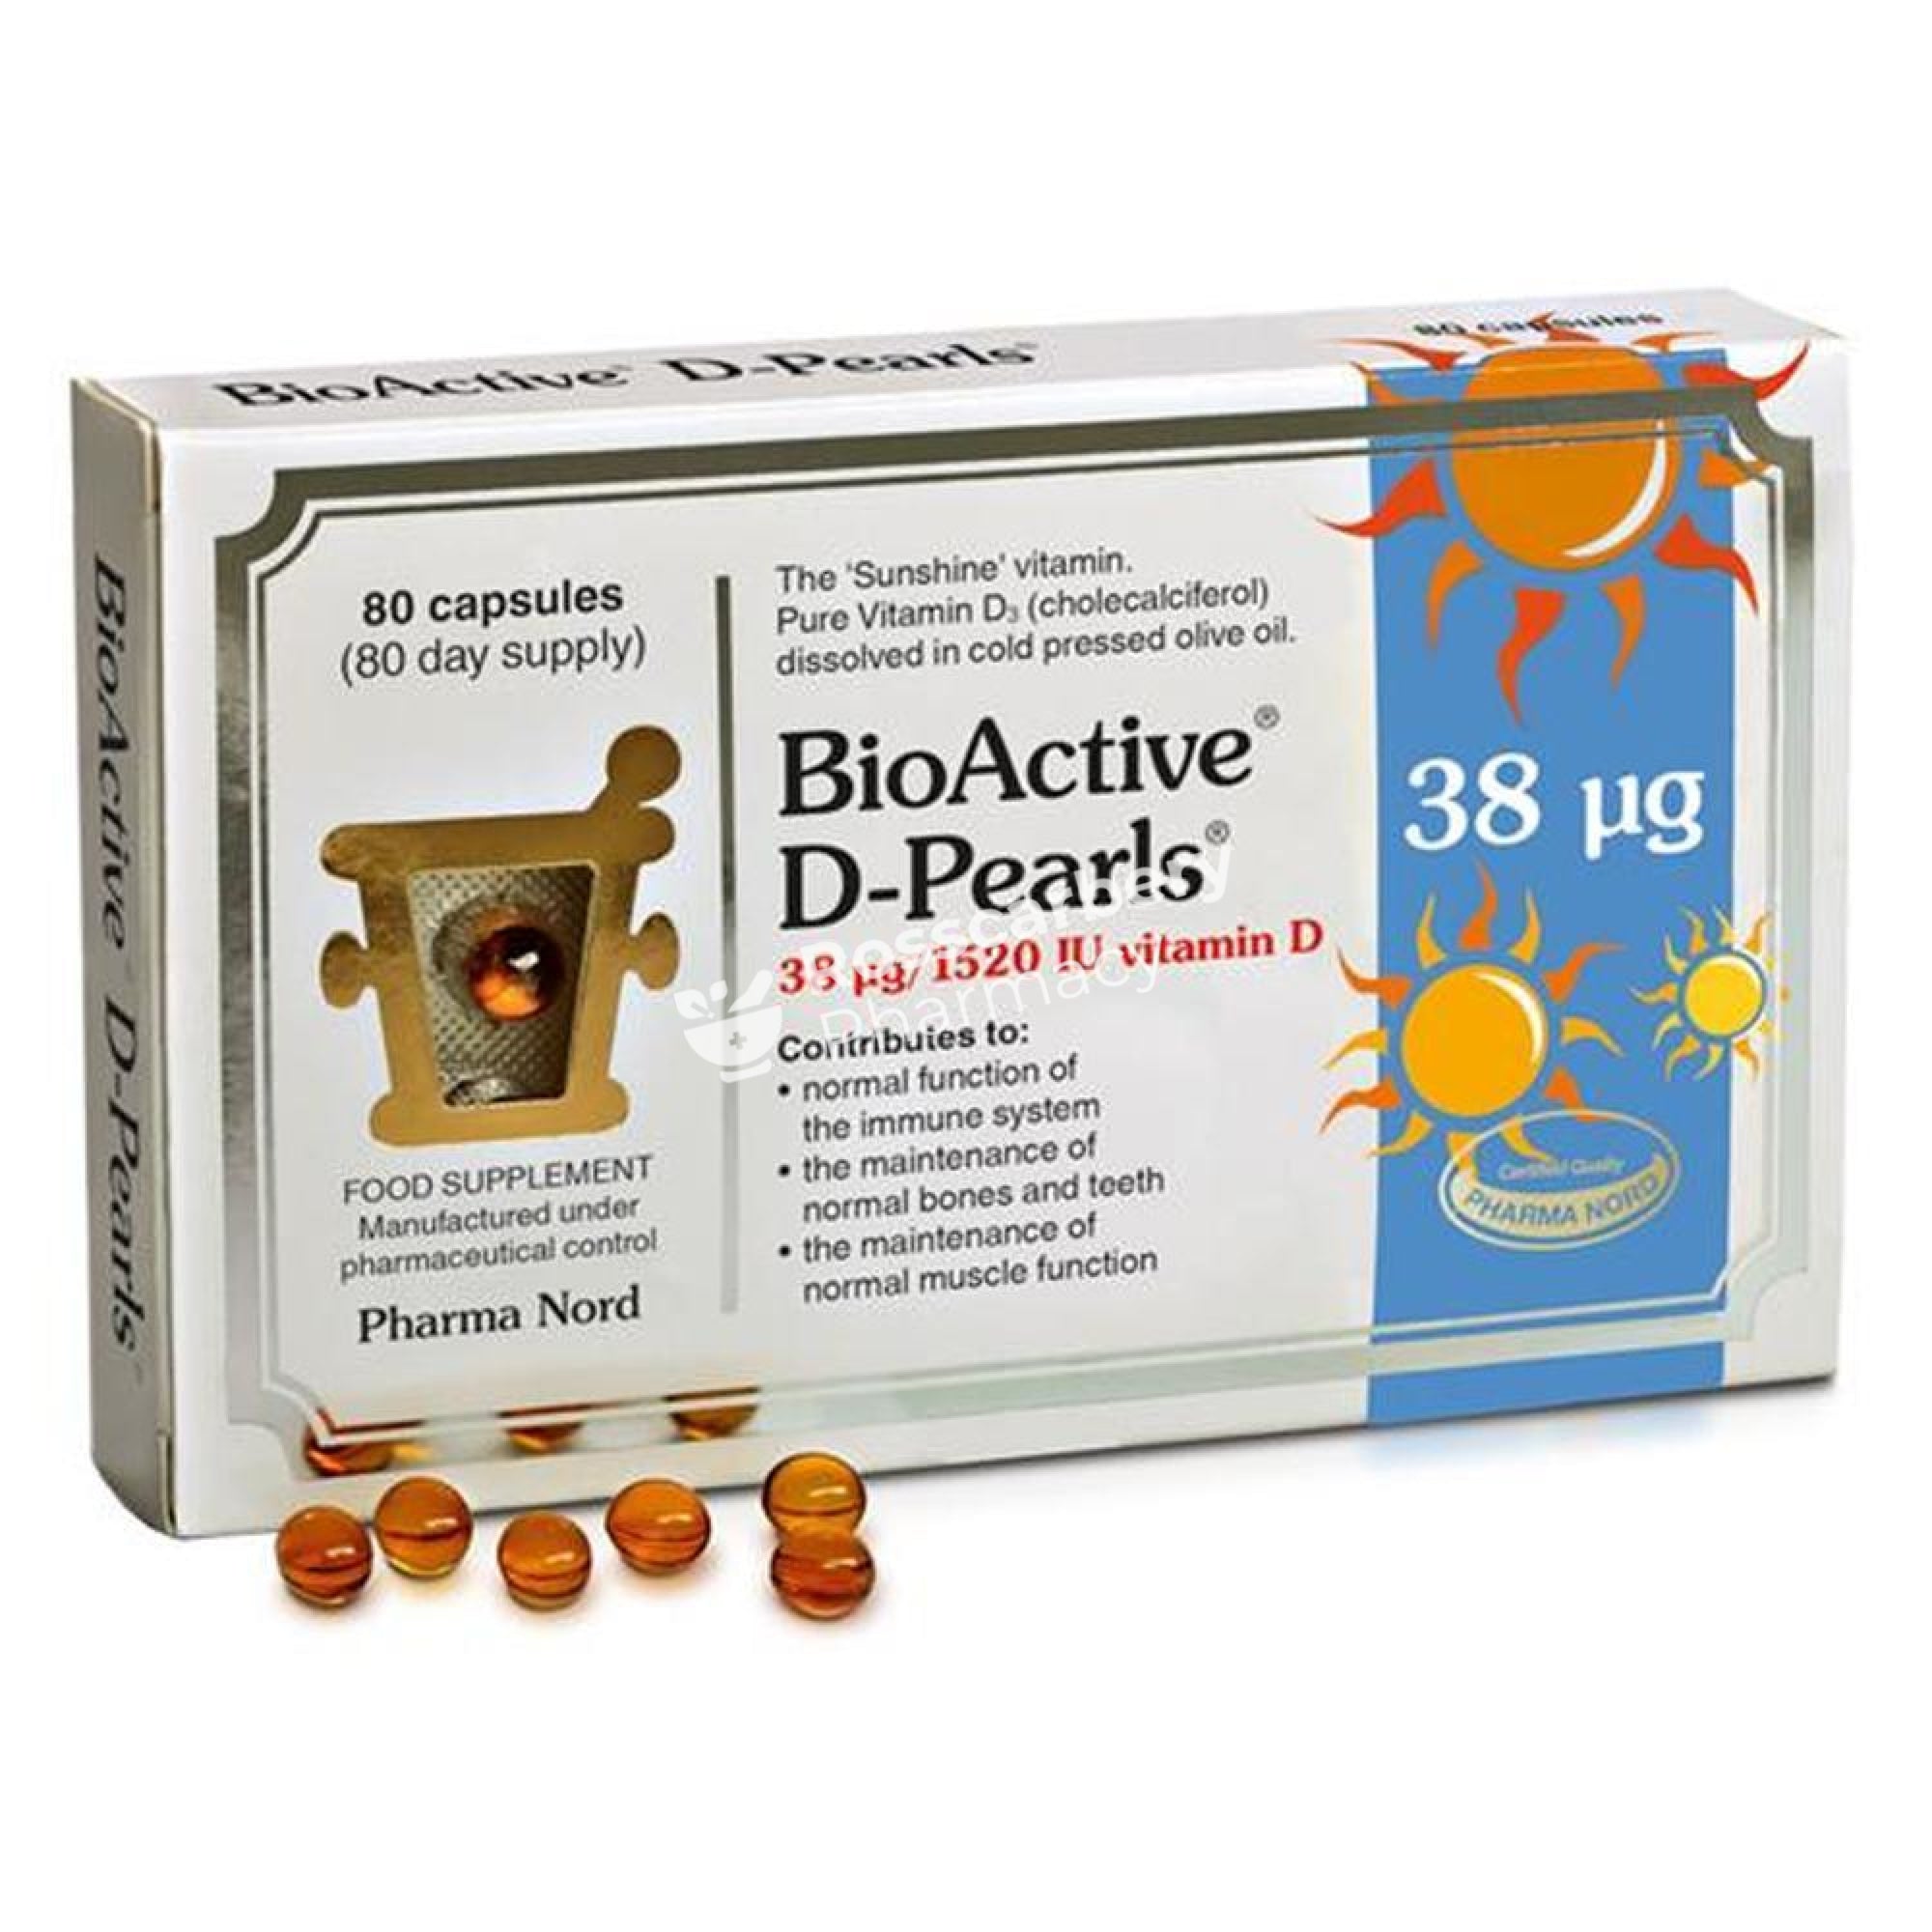 Bioactive D-Pearls 38Ug/1520 Iu Vitamin D Immune System